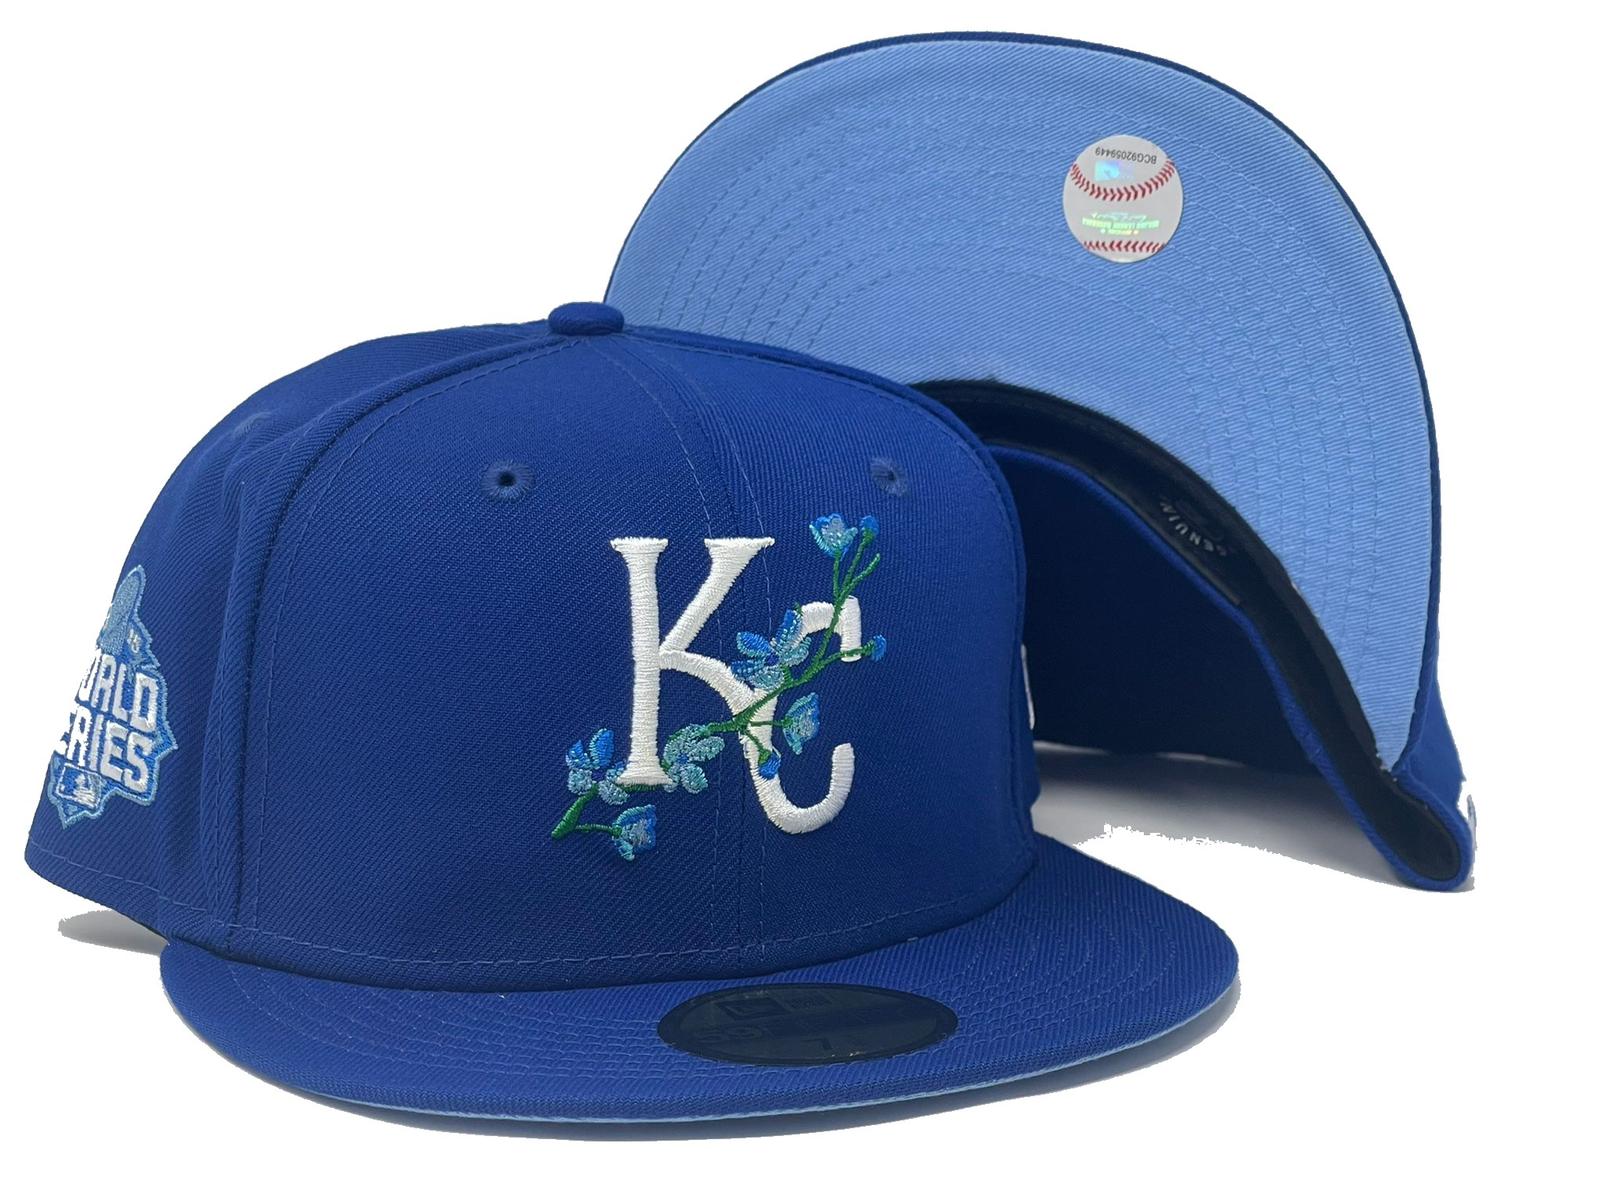 Kansas City Royals 2015 World Series Champions 5 x 5 Logo Patch